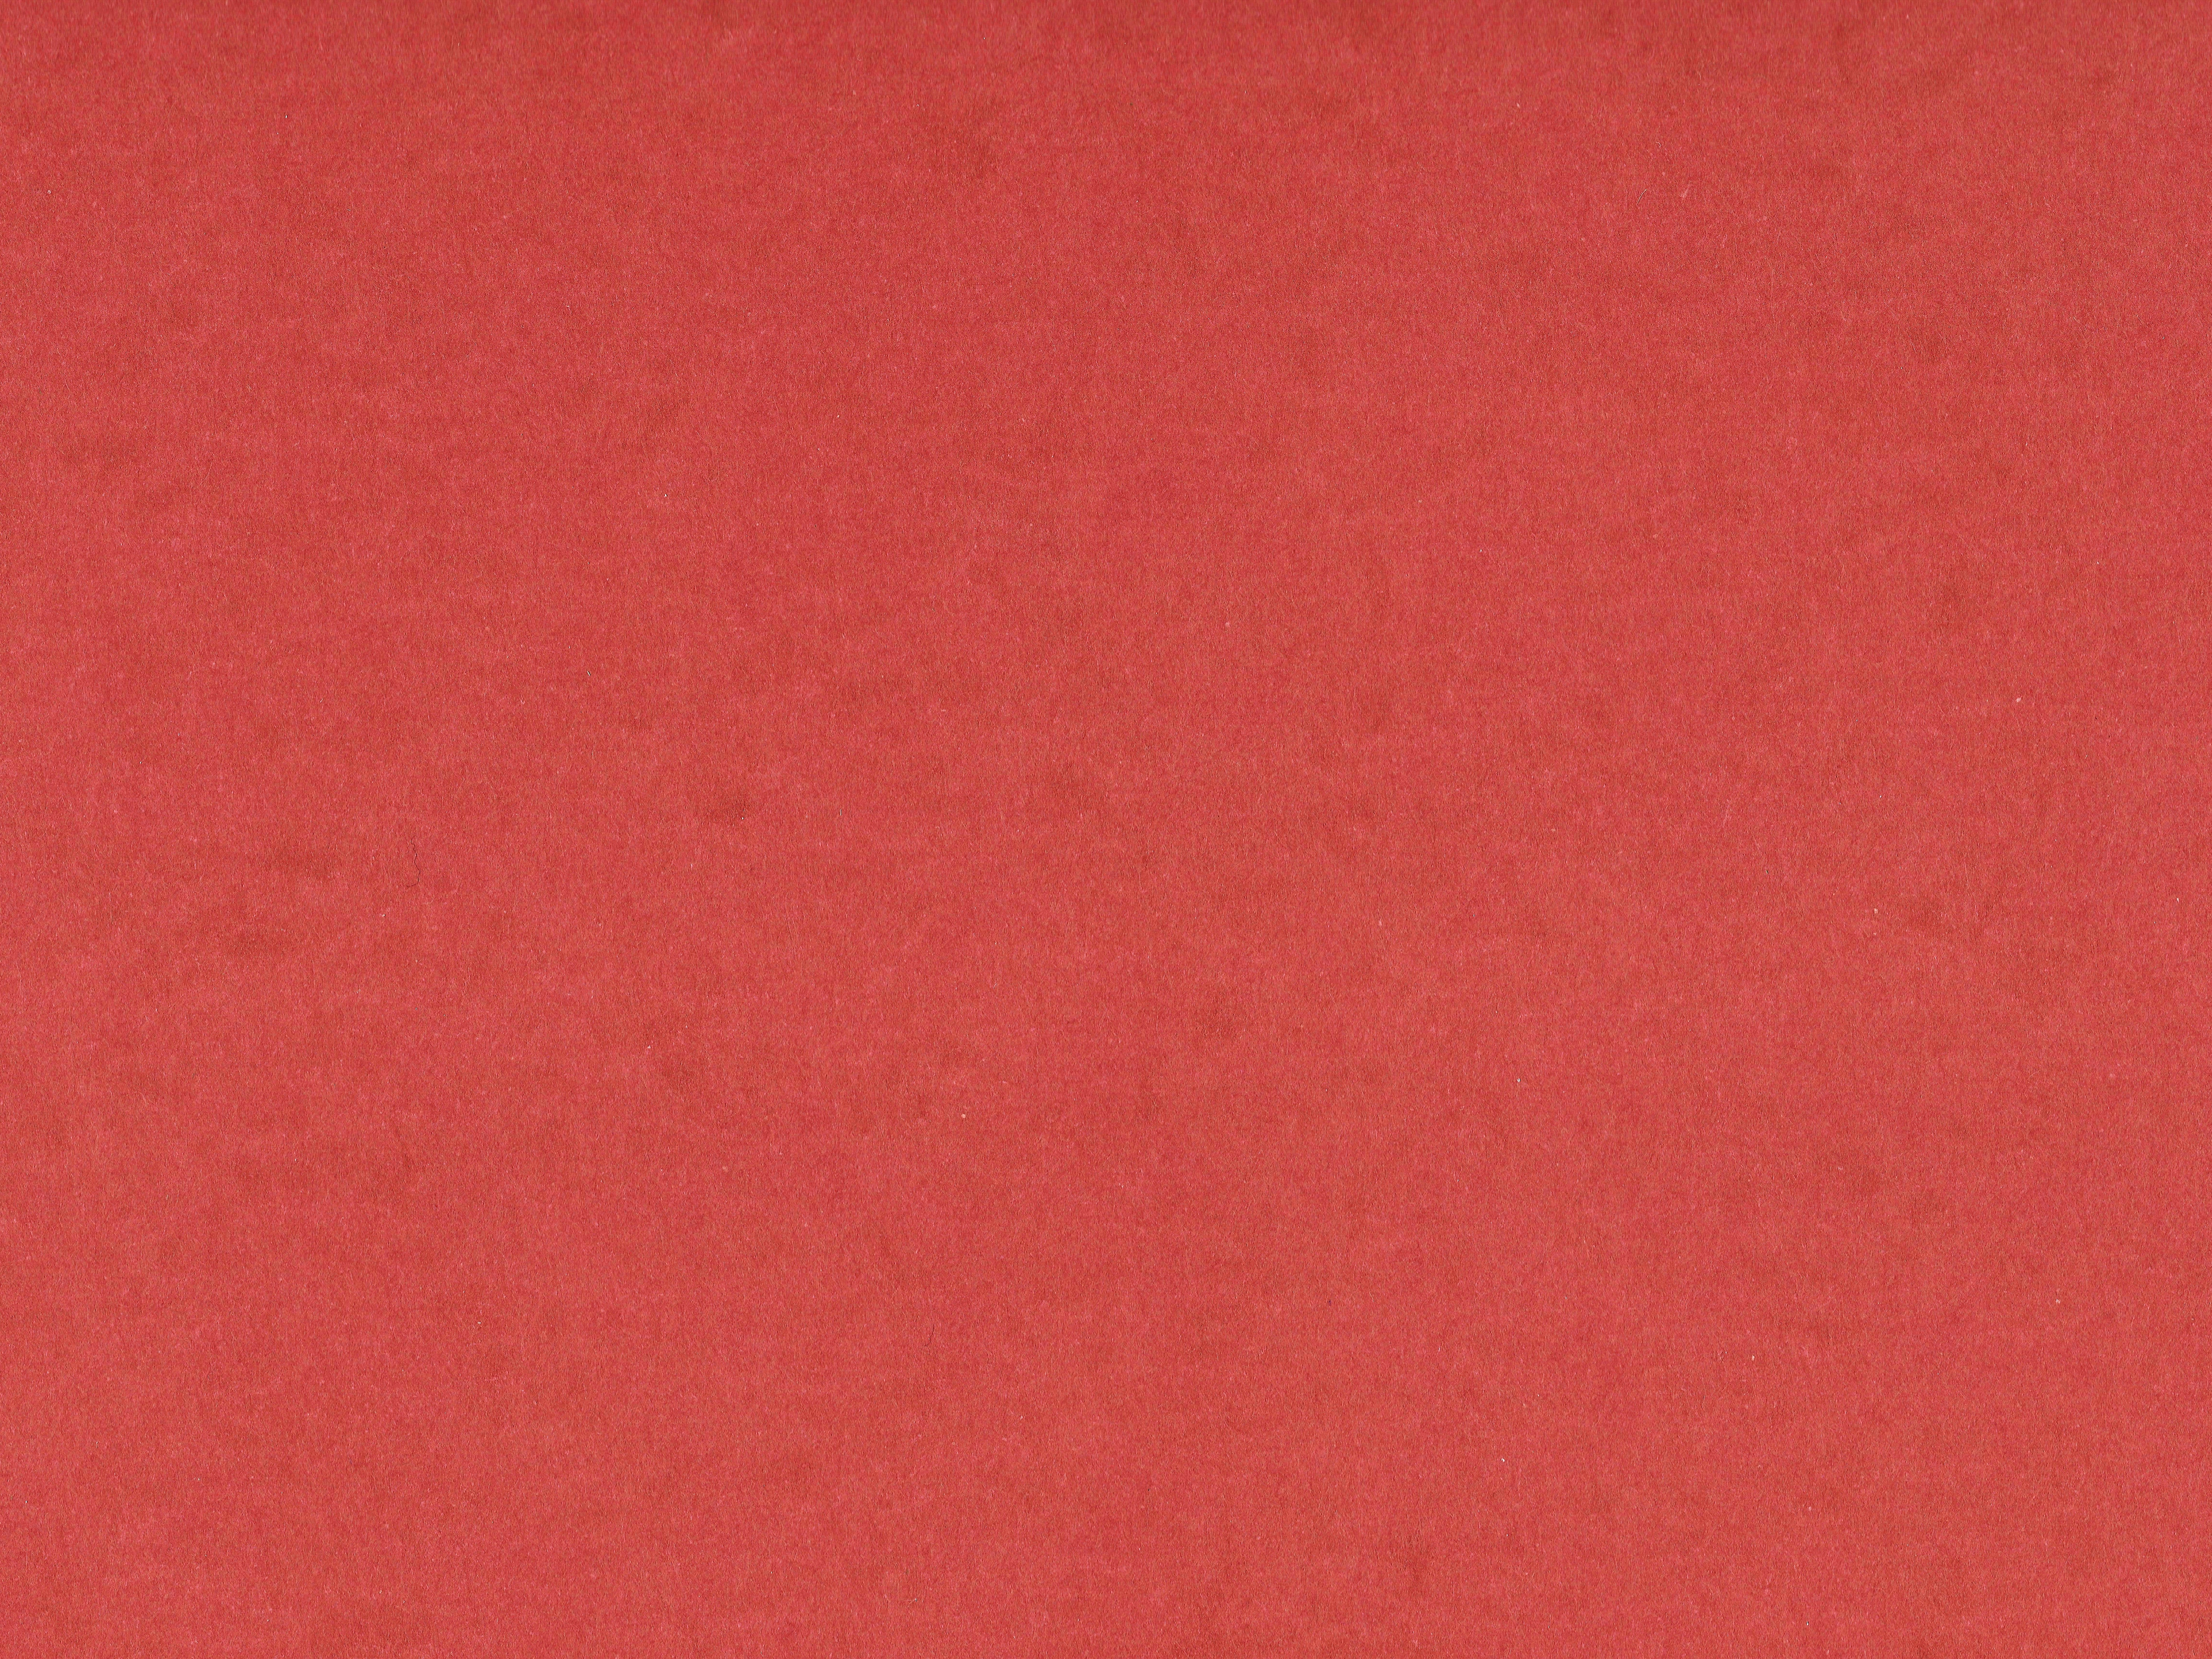 Kostenlose Bild: Papier, rot, abstrakt, Textur, Muster, Material